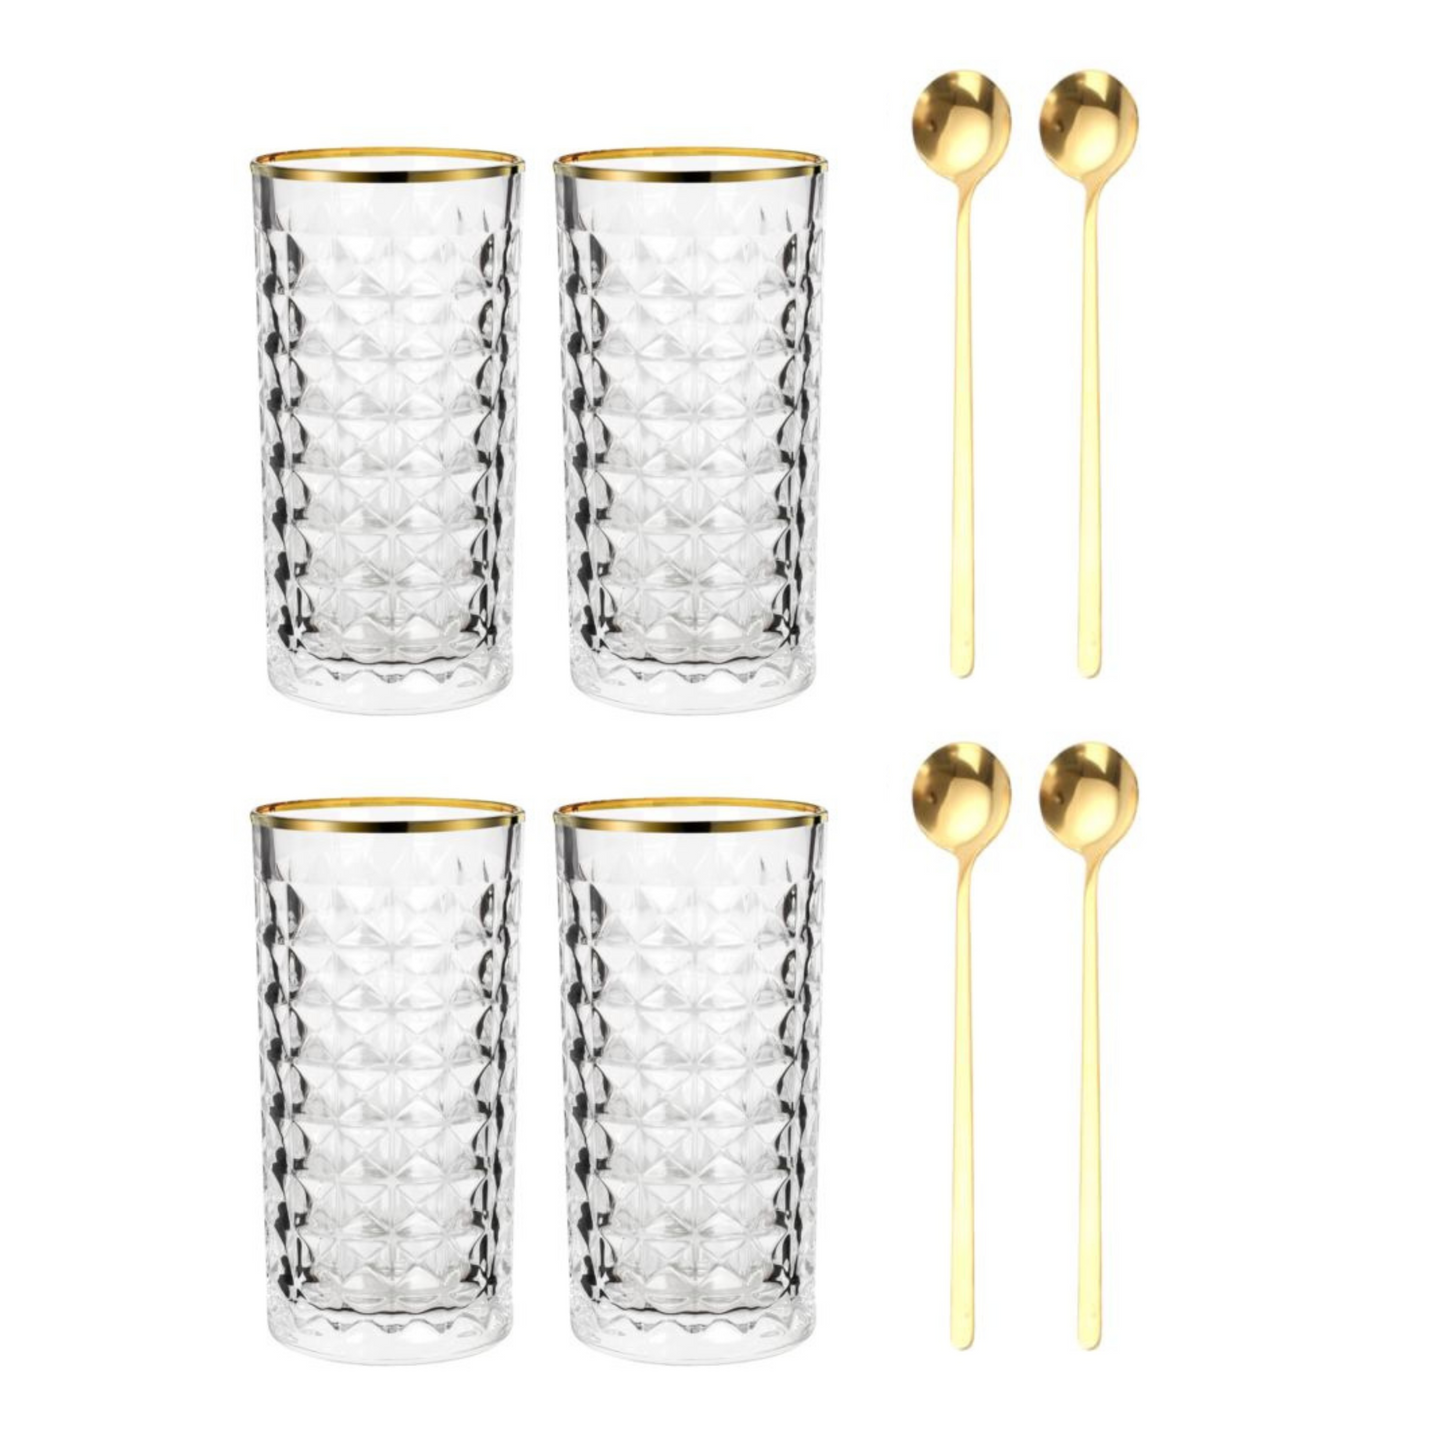 Kristall Latte Macchiato Gläser gold Rand goldene Löffel 4er-Set